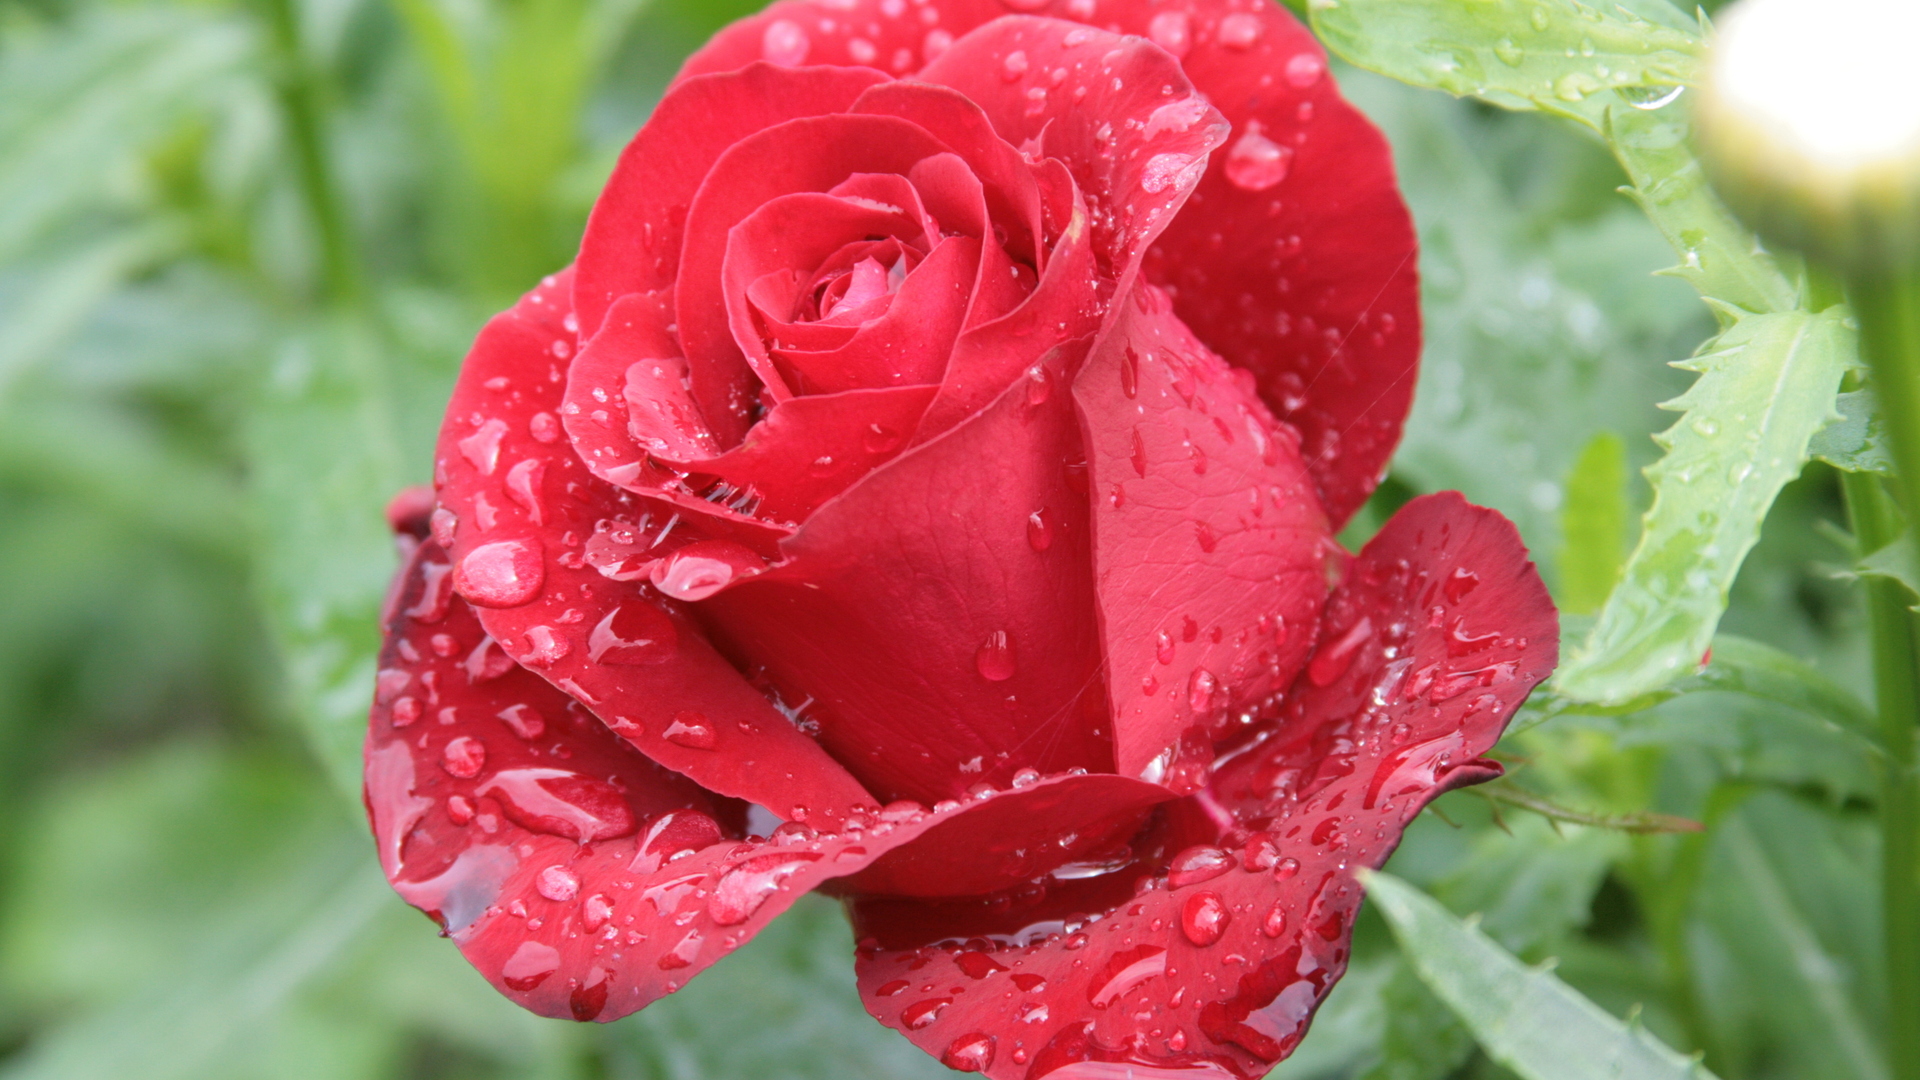 res rose flower best capturing images photos pics downloads